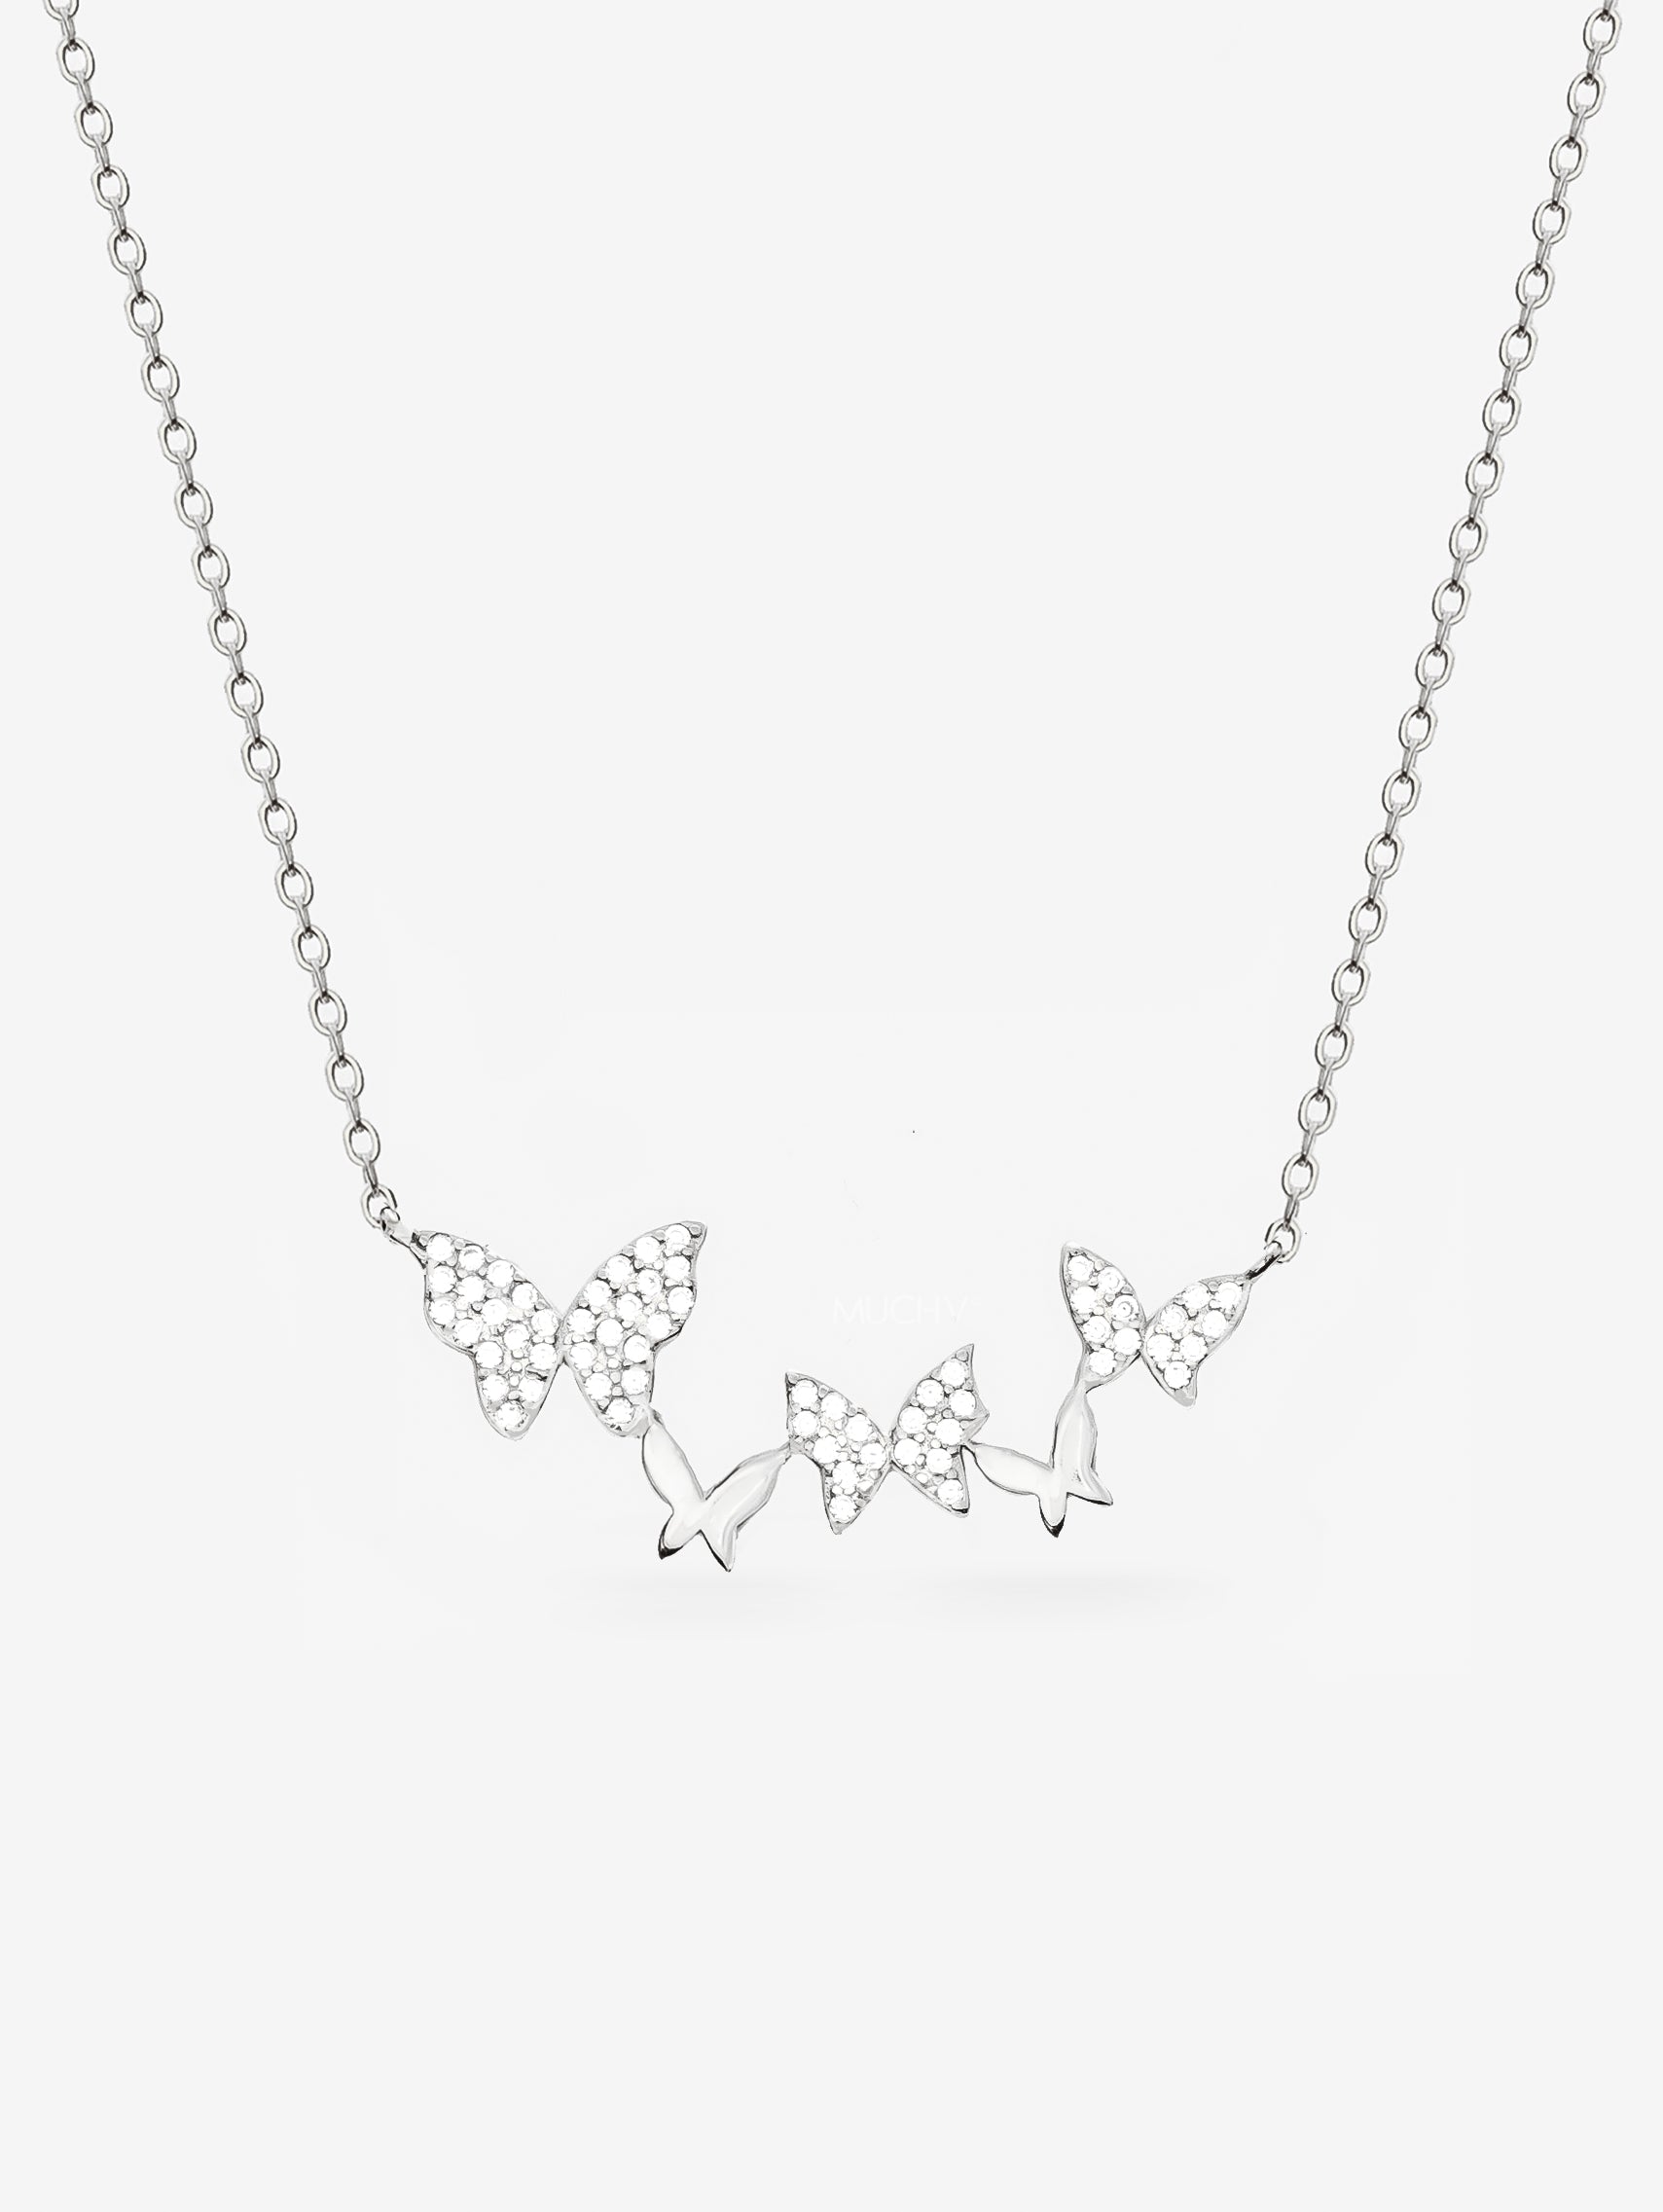 Silver Butterfly Necklace - Five Butterflies